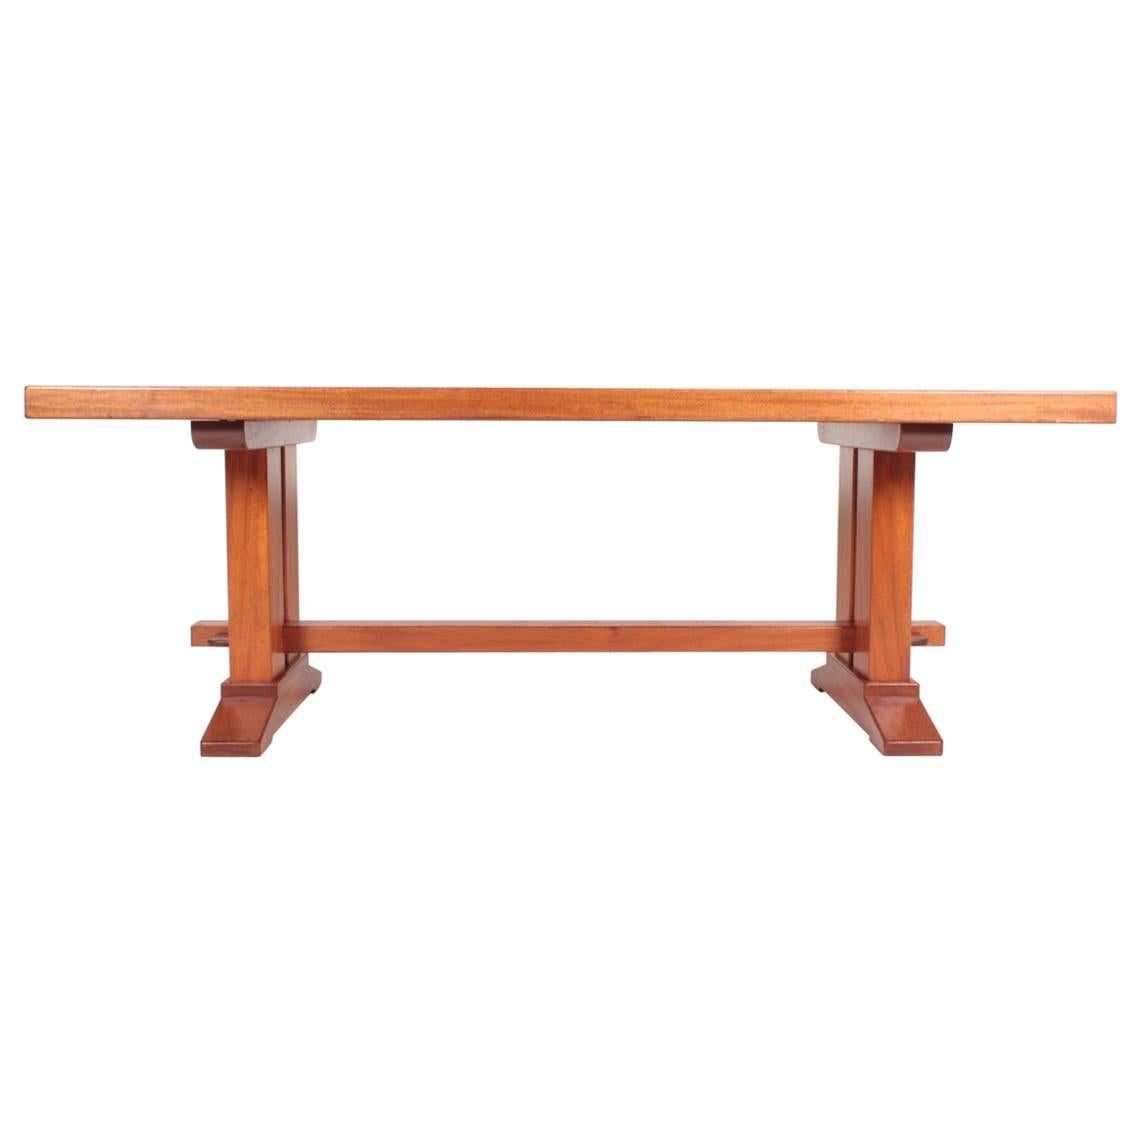 Custom Made Table in Solid Mahogany by Søborg Møbler, Danish Modern Design  1980s For Sale at 1stDibs